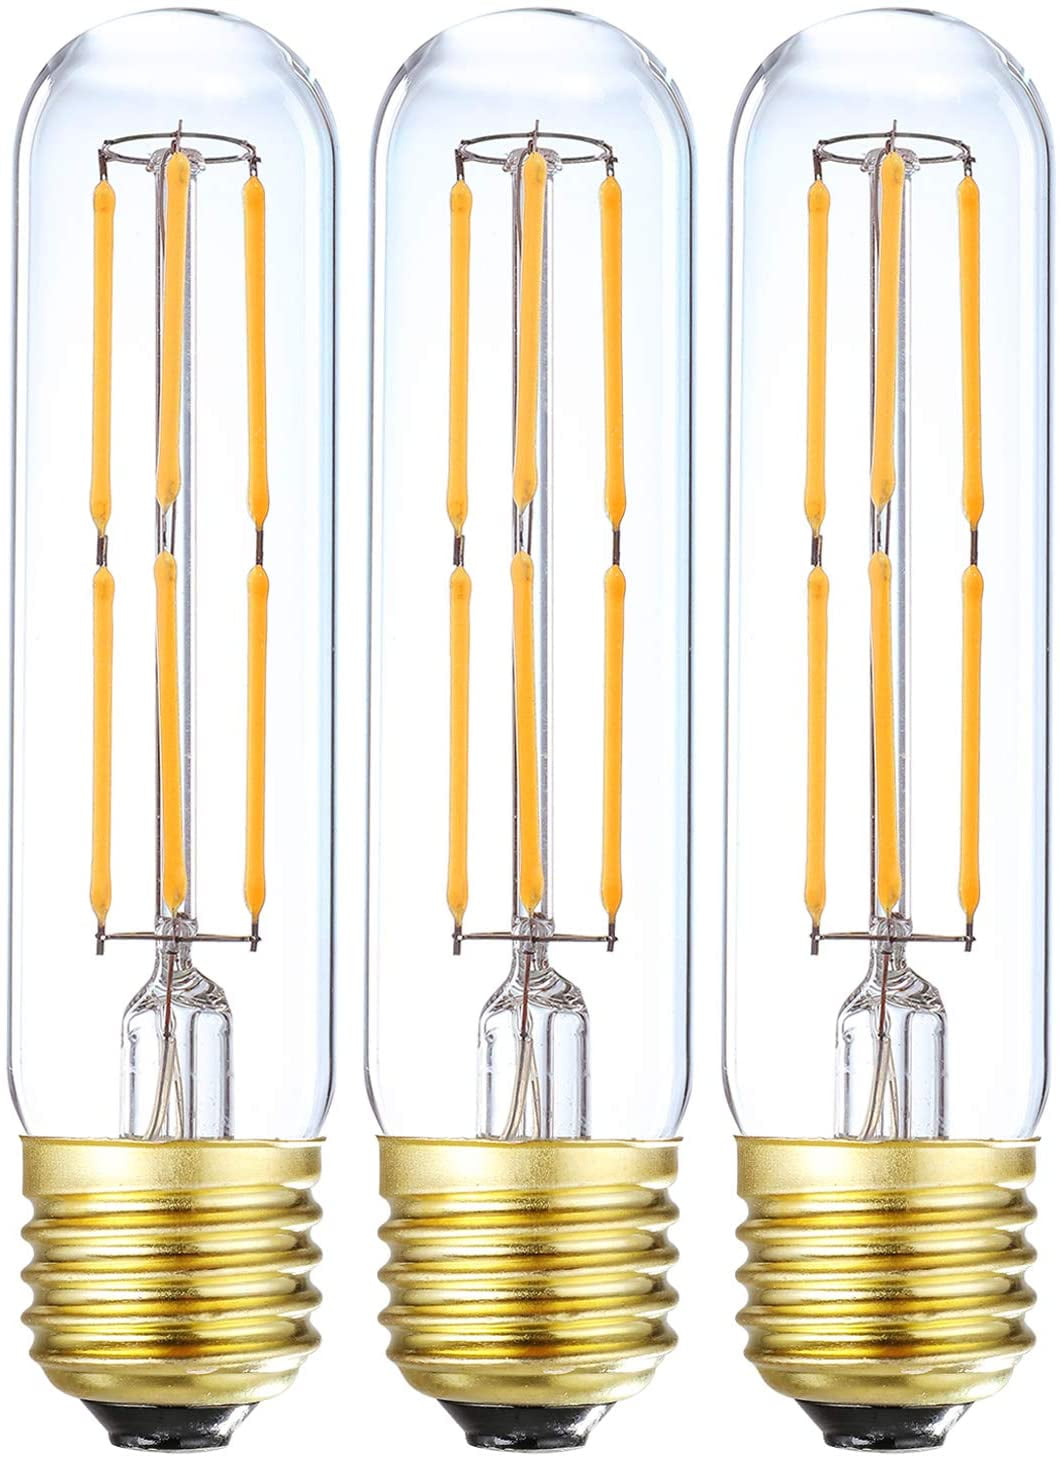 LEOOLS T10 Led Bulb 60 Watt Incandescent Bulb Equivalent E26 Base Lamp Bulb Warm White - 3Pcs 6W Dimmable Led Tubular Bulbs Clear Glass for Cabinet Display Cabinet etc,3 Pack. 600LM 